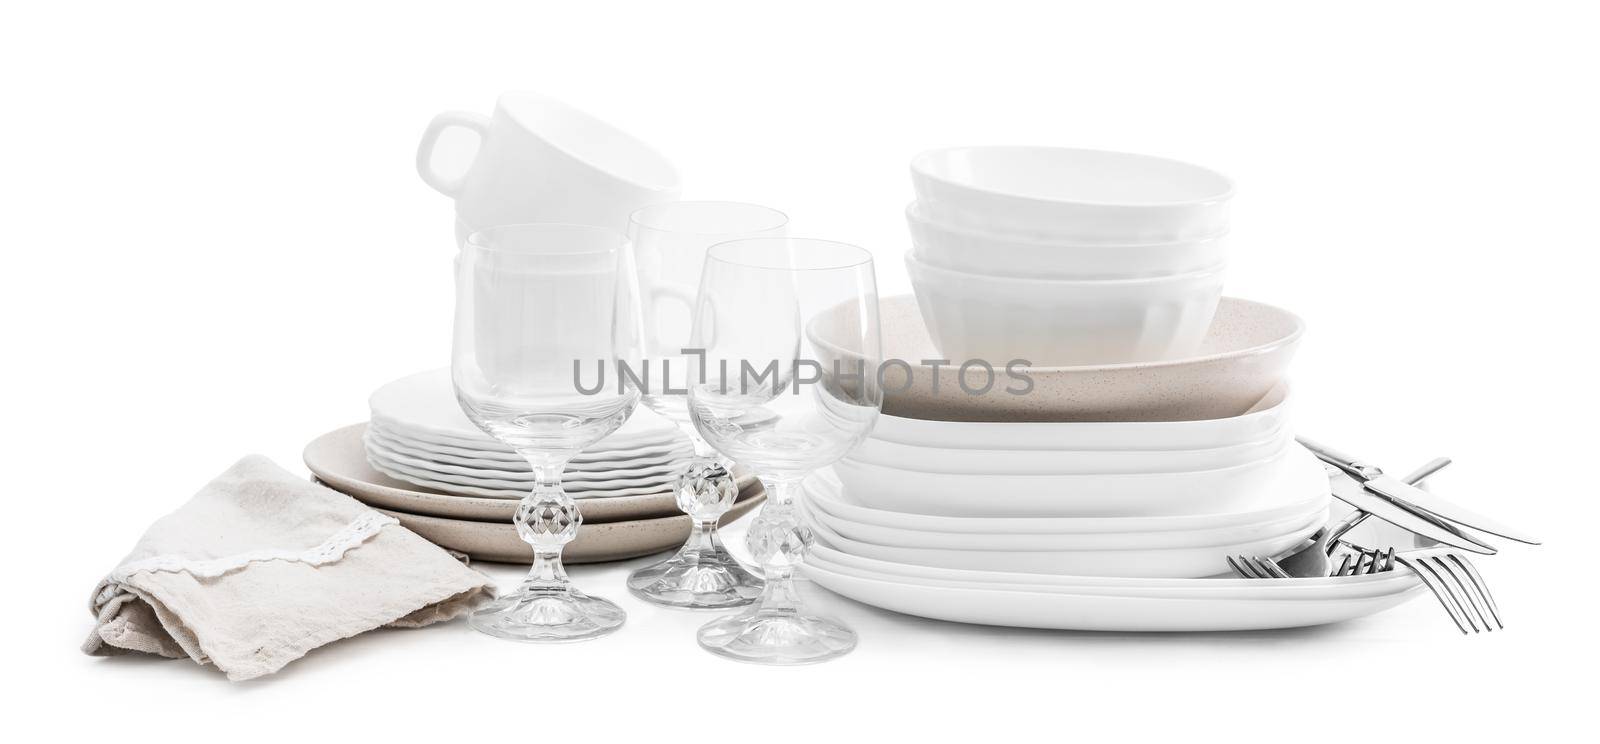 Set of white ceramic dishes and shiny glasses by tan4ikk1